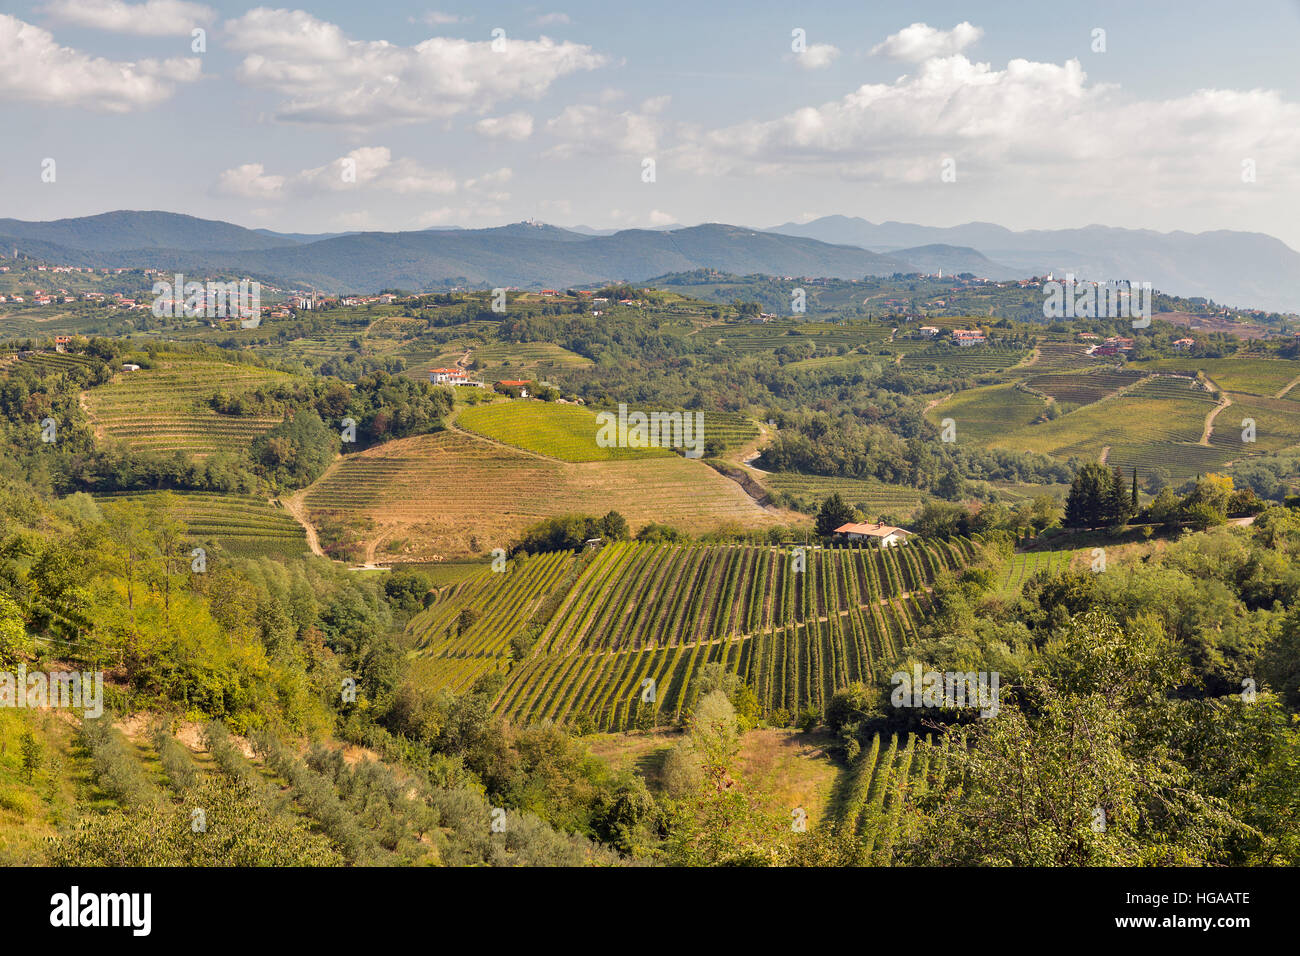 Rural mediterranean landscape with village, vineyards and mountains Stock Photo